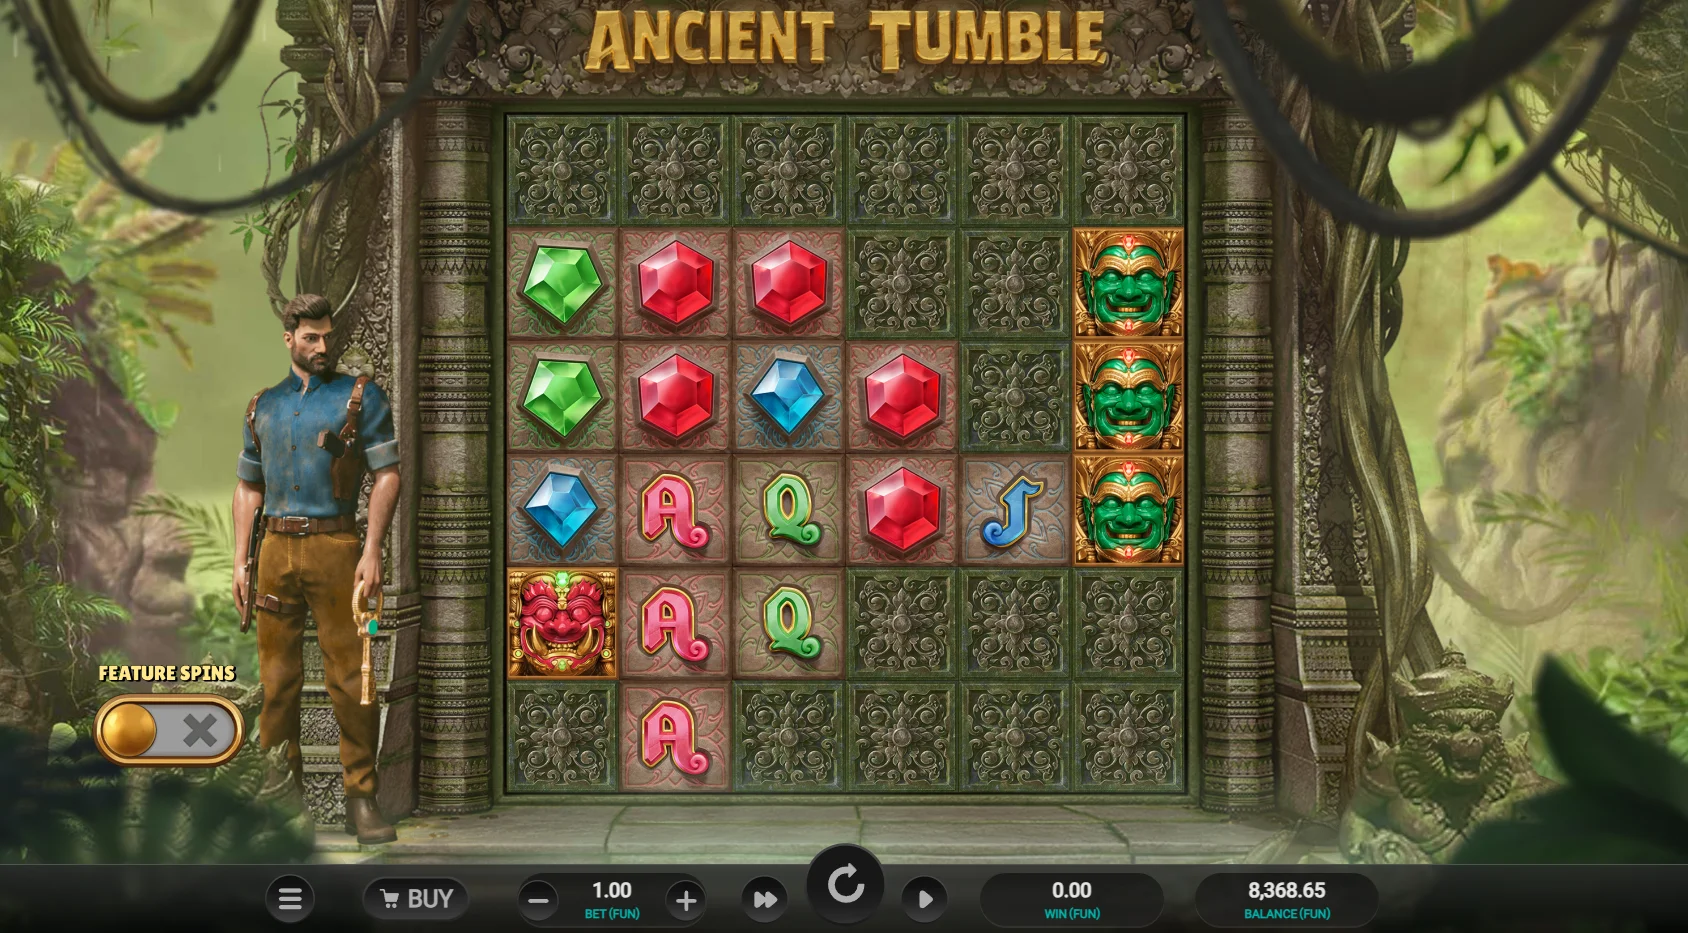 Ancient Tumble base game play